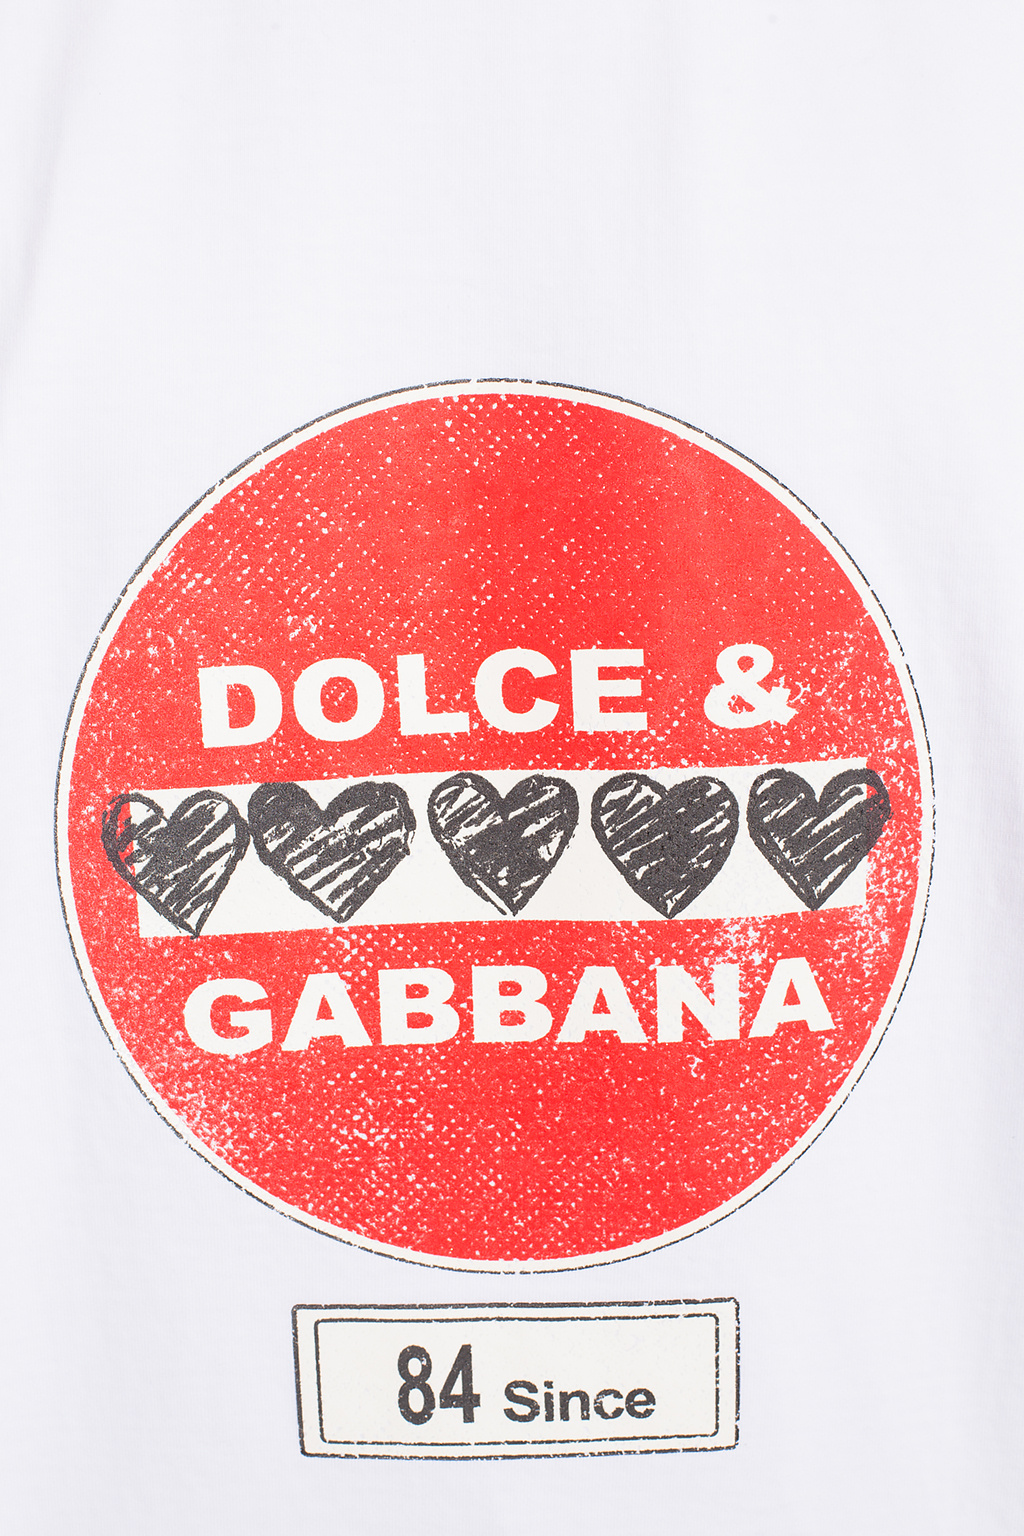 dolce trump & Gabbana Printed T-shirt